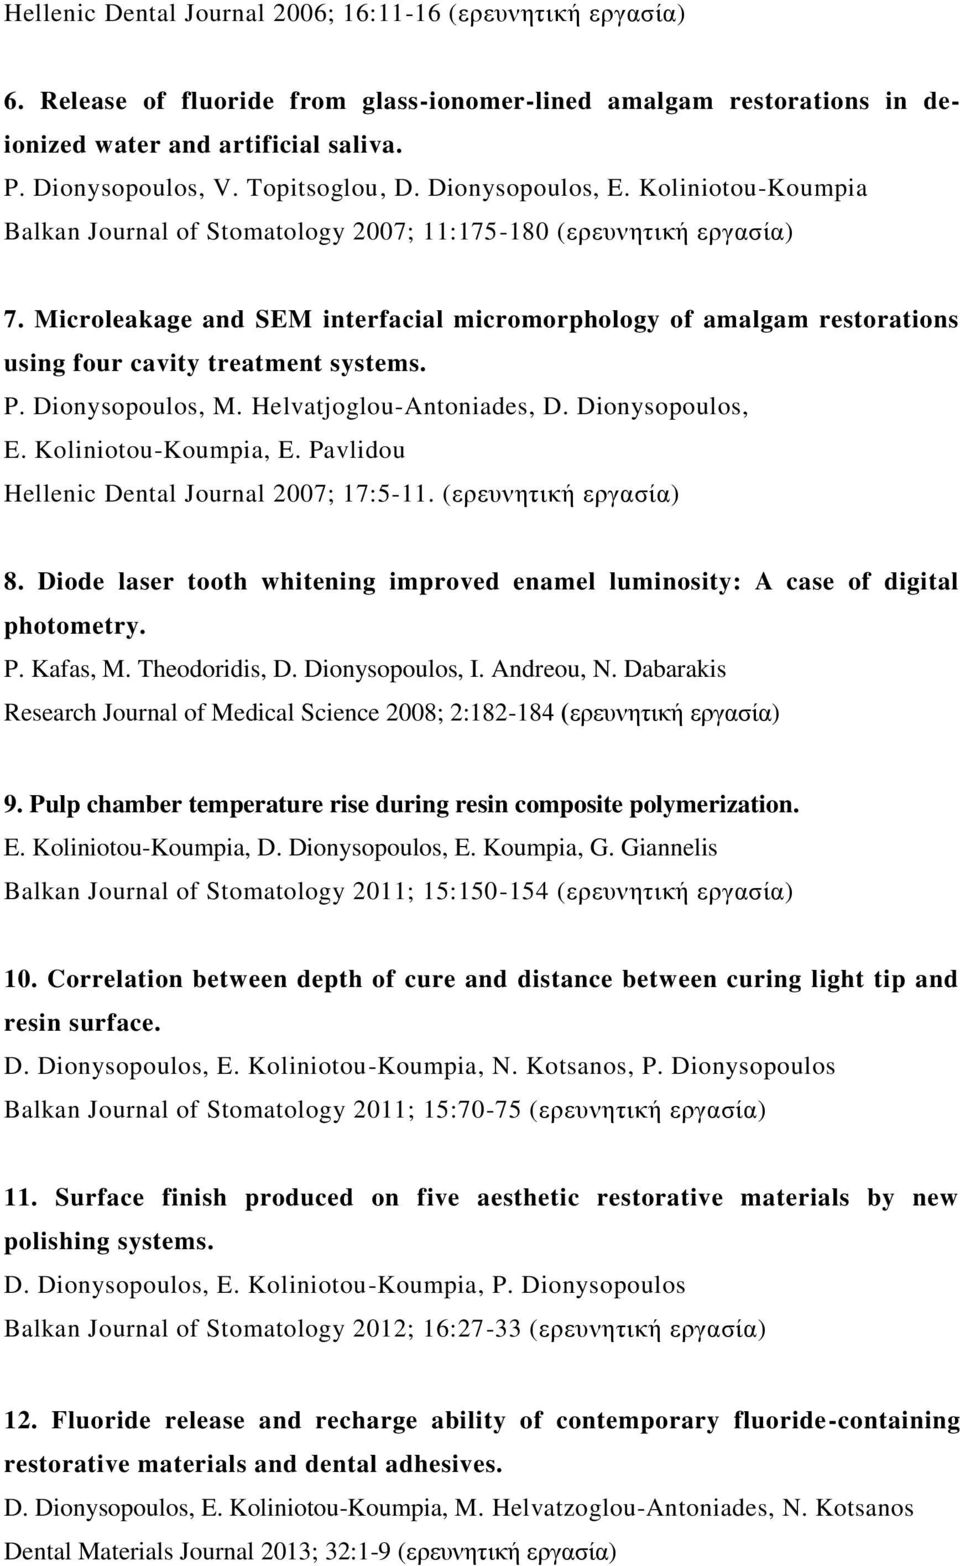 Microleakage and SEM interfacial micromorphology of amalgam restorations using four cavity treatment systems. P. Dionysopoulos, M. Helvatjoglou-Antoniades, D. Dionysopoulos, E. Koliniotou-Koumpia, E.